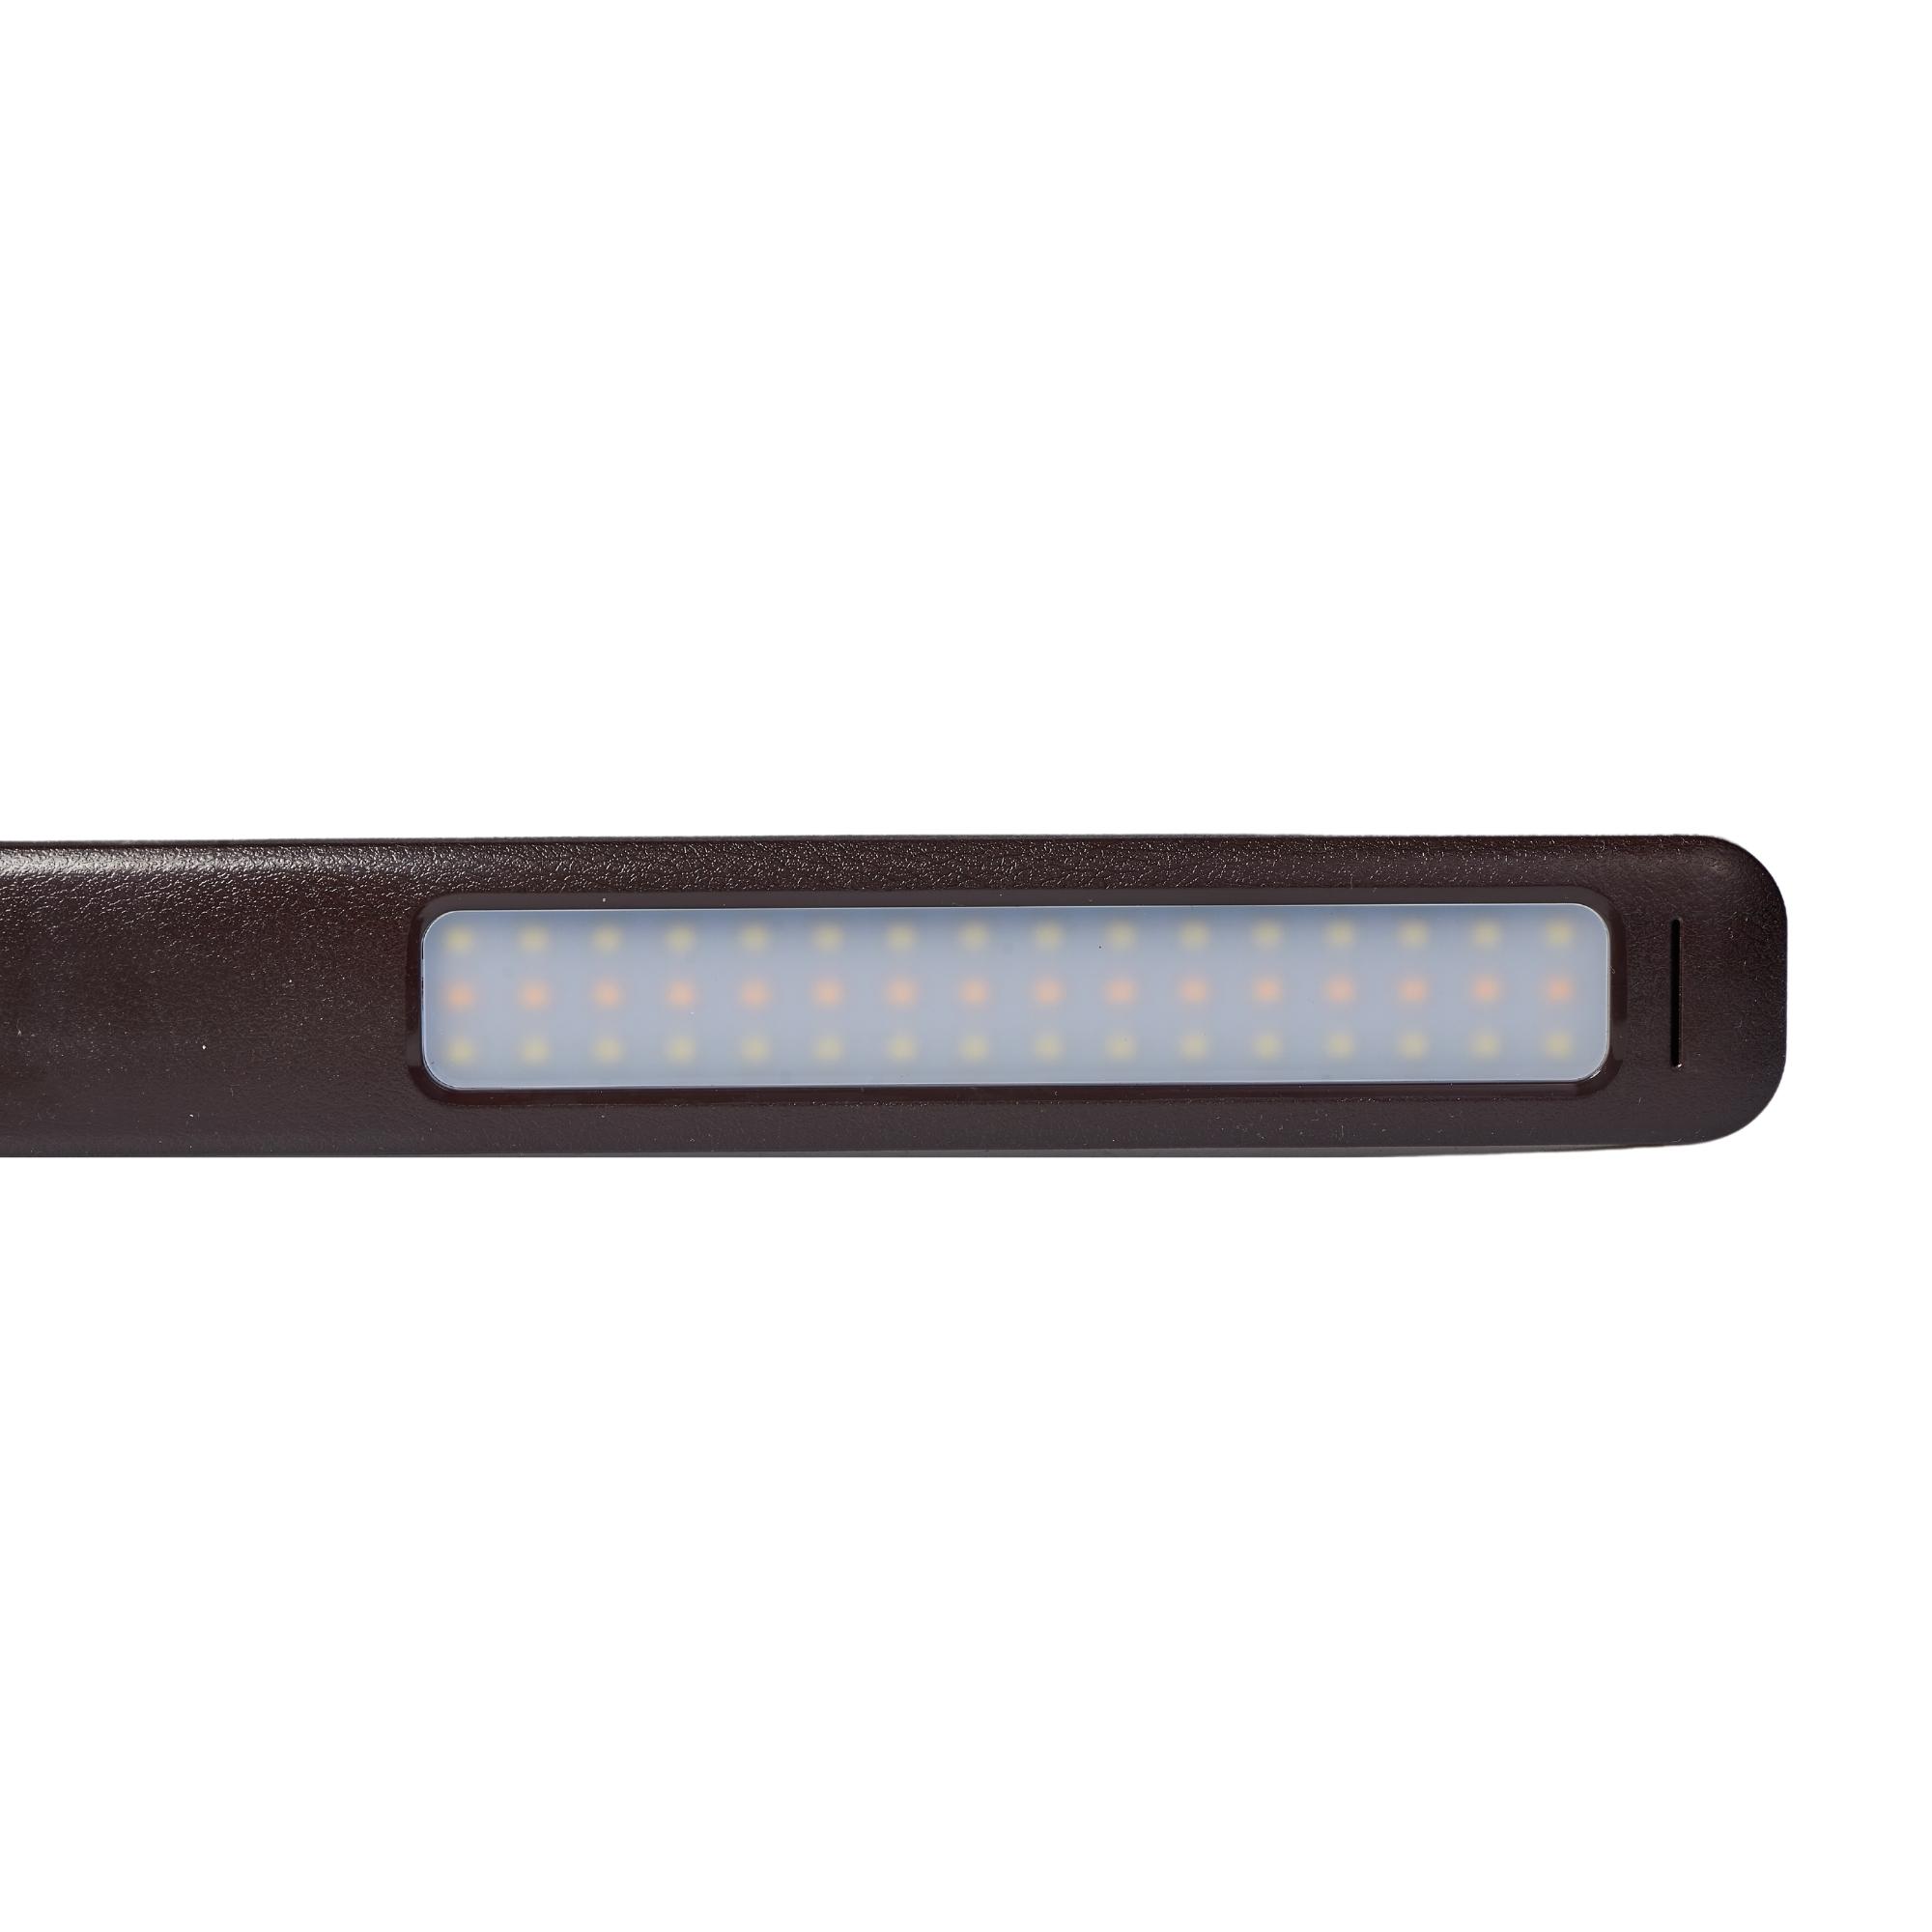 Настольная лампа Uniel с сенсорным выключатетелем, часами, календарем, термометром TLD-551 Brown/LED/450Lm/3000-6000K/Dimmer/USB